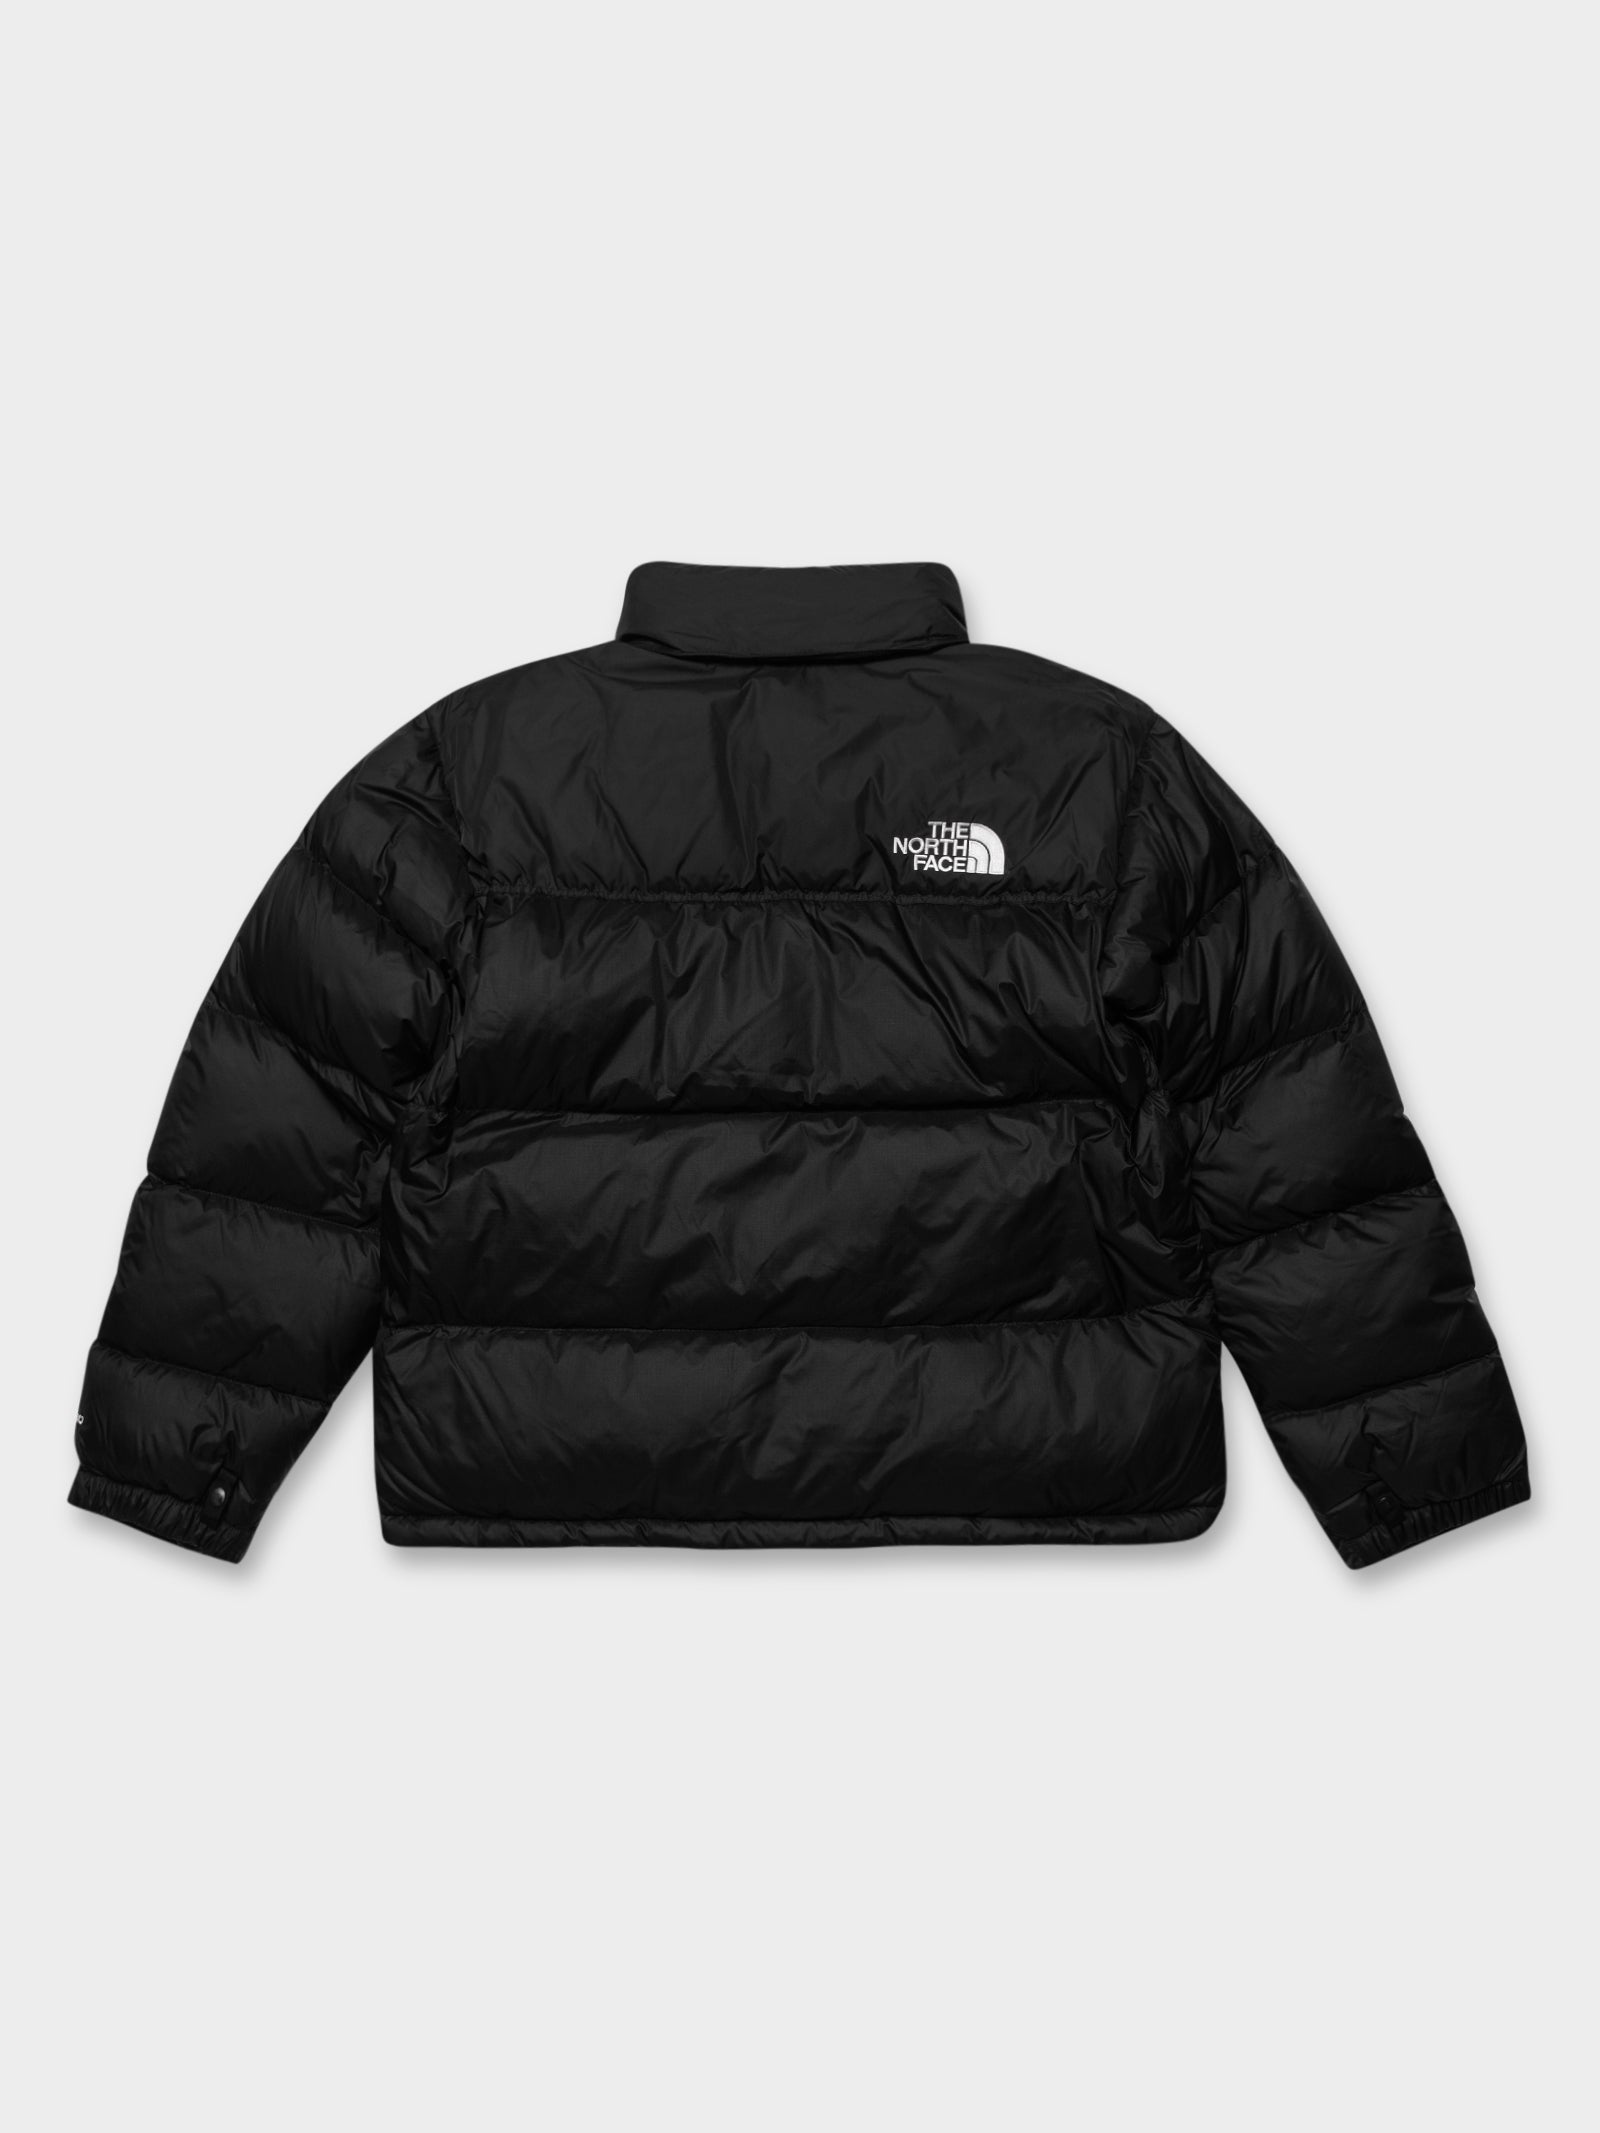 1996 Retro Nuptse Jacket in Black - Glue Store